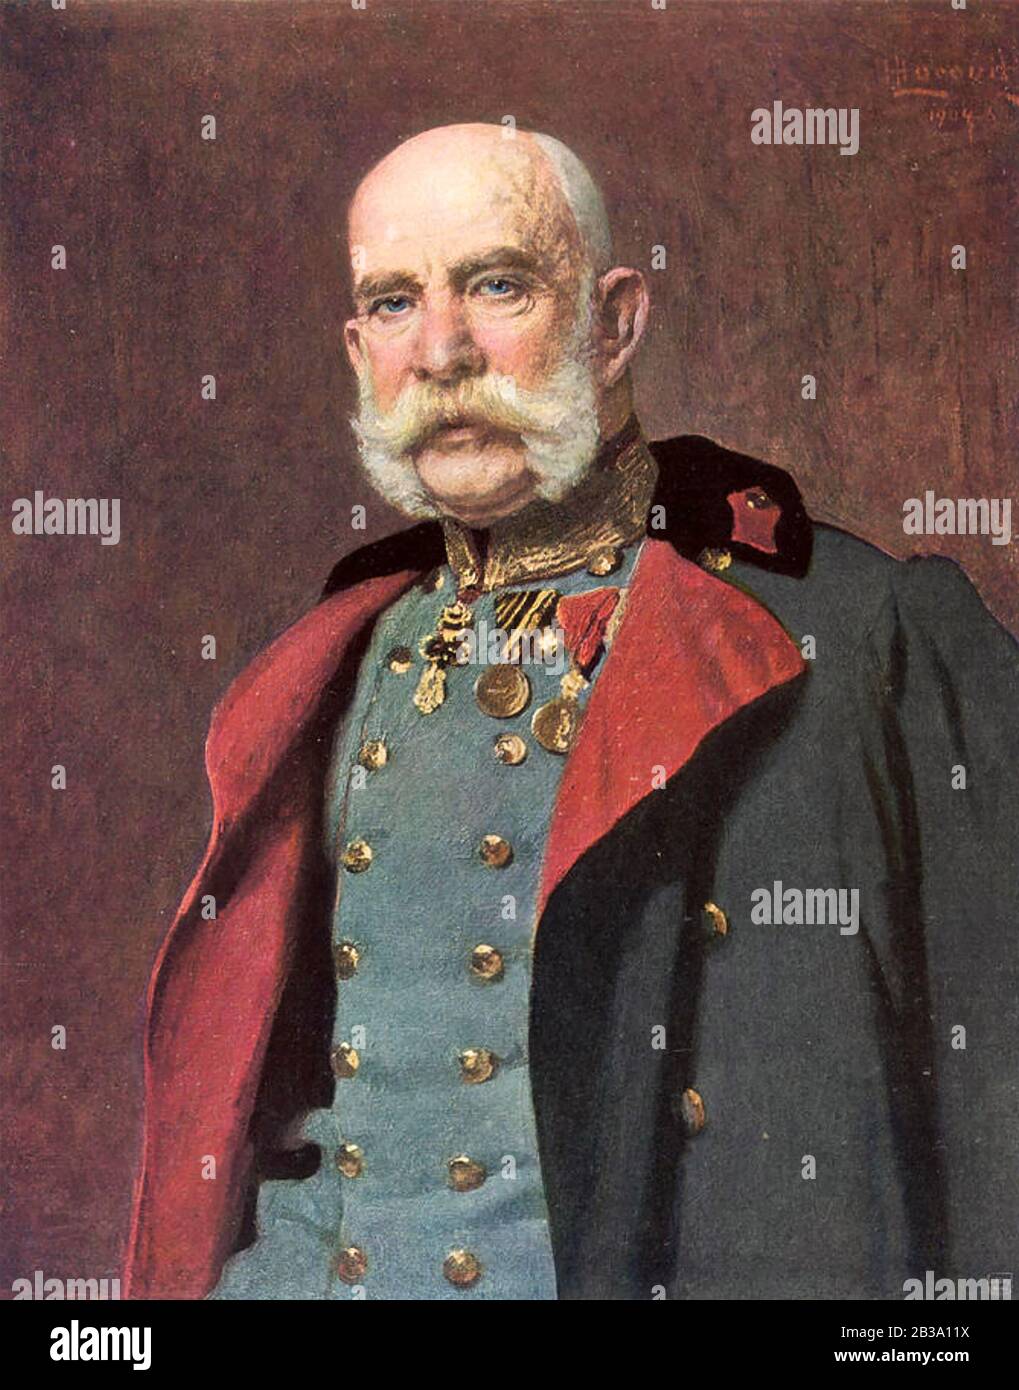 FRANZ JOSEPH I OF AUSTRIA (1830-1916) monarch of the Austro-Hungarian Empire, about 1905 Stock Photo